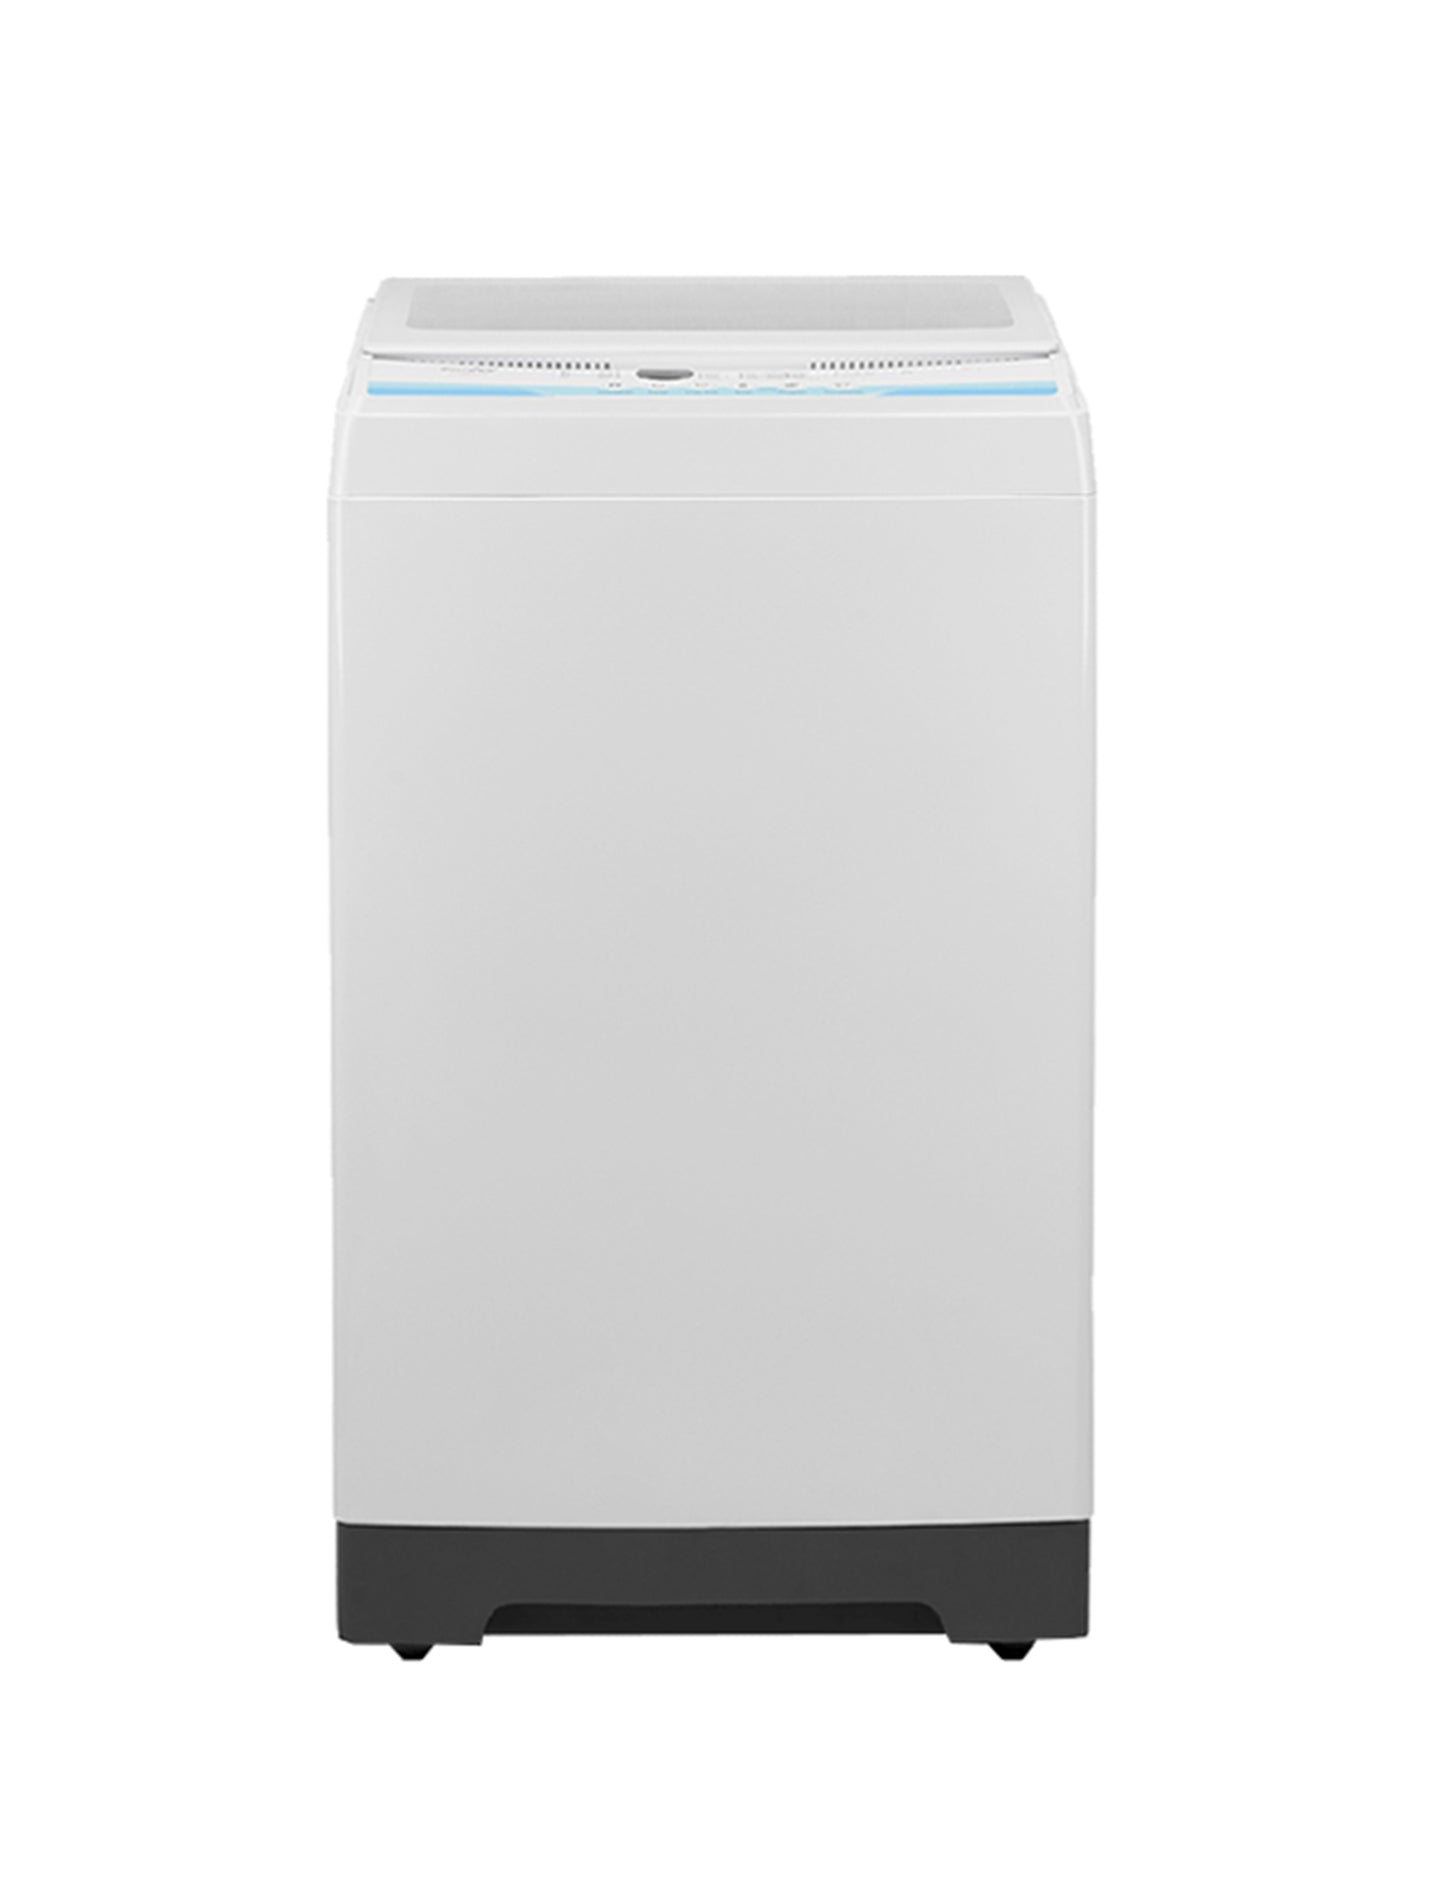 COMFEE' Washing Machine, 1.8 Cu.ft LED Portable Washing Machine and Compact  Washer, Hygiene+ Deep Clean - AliExpress